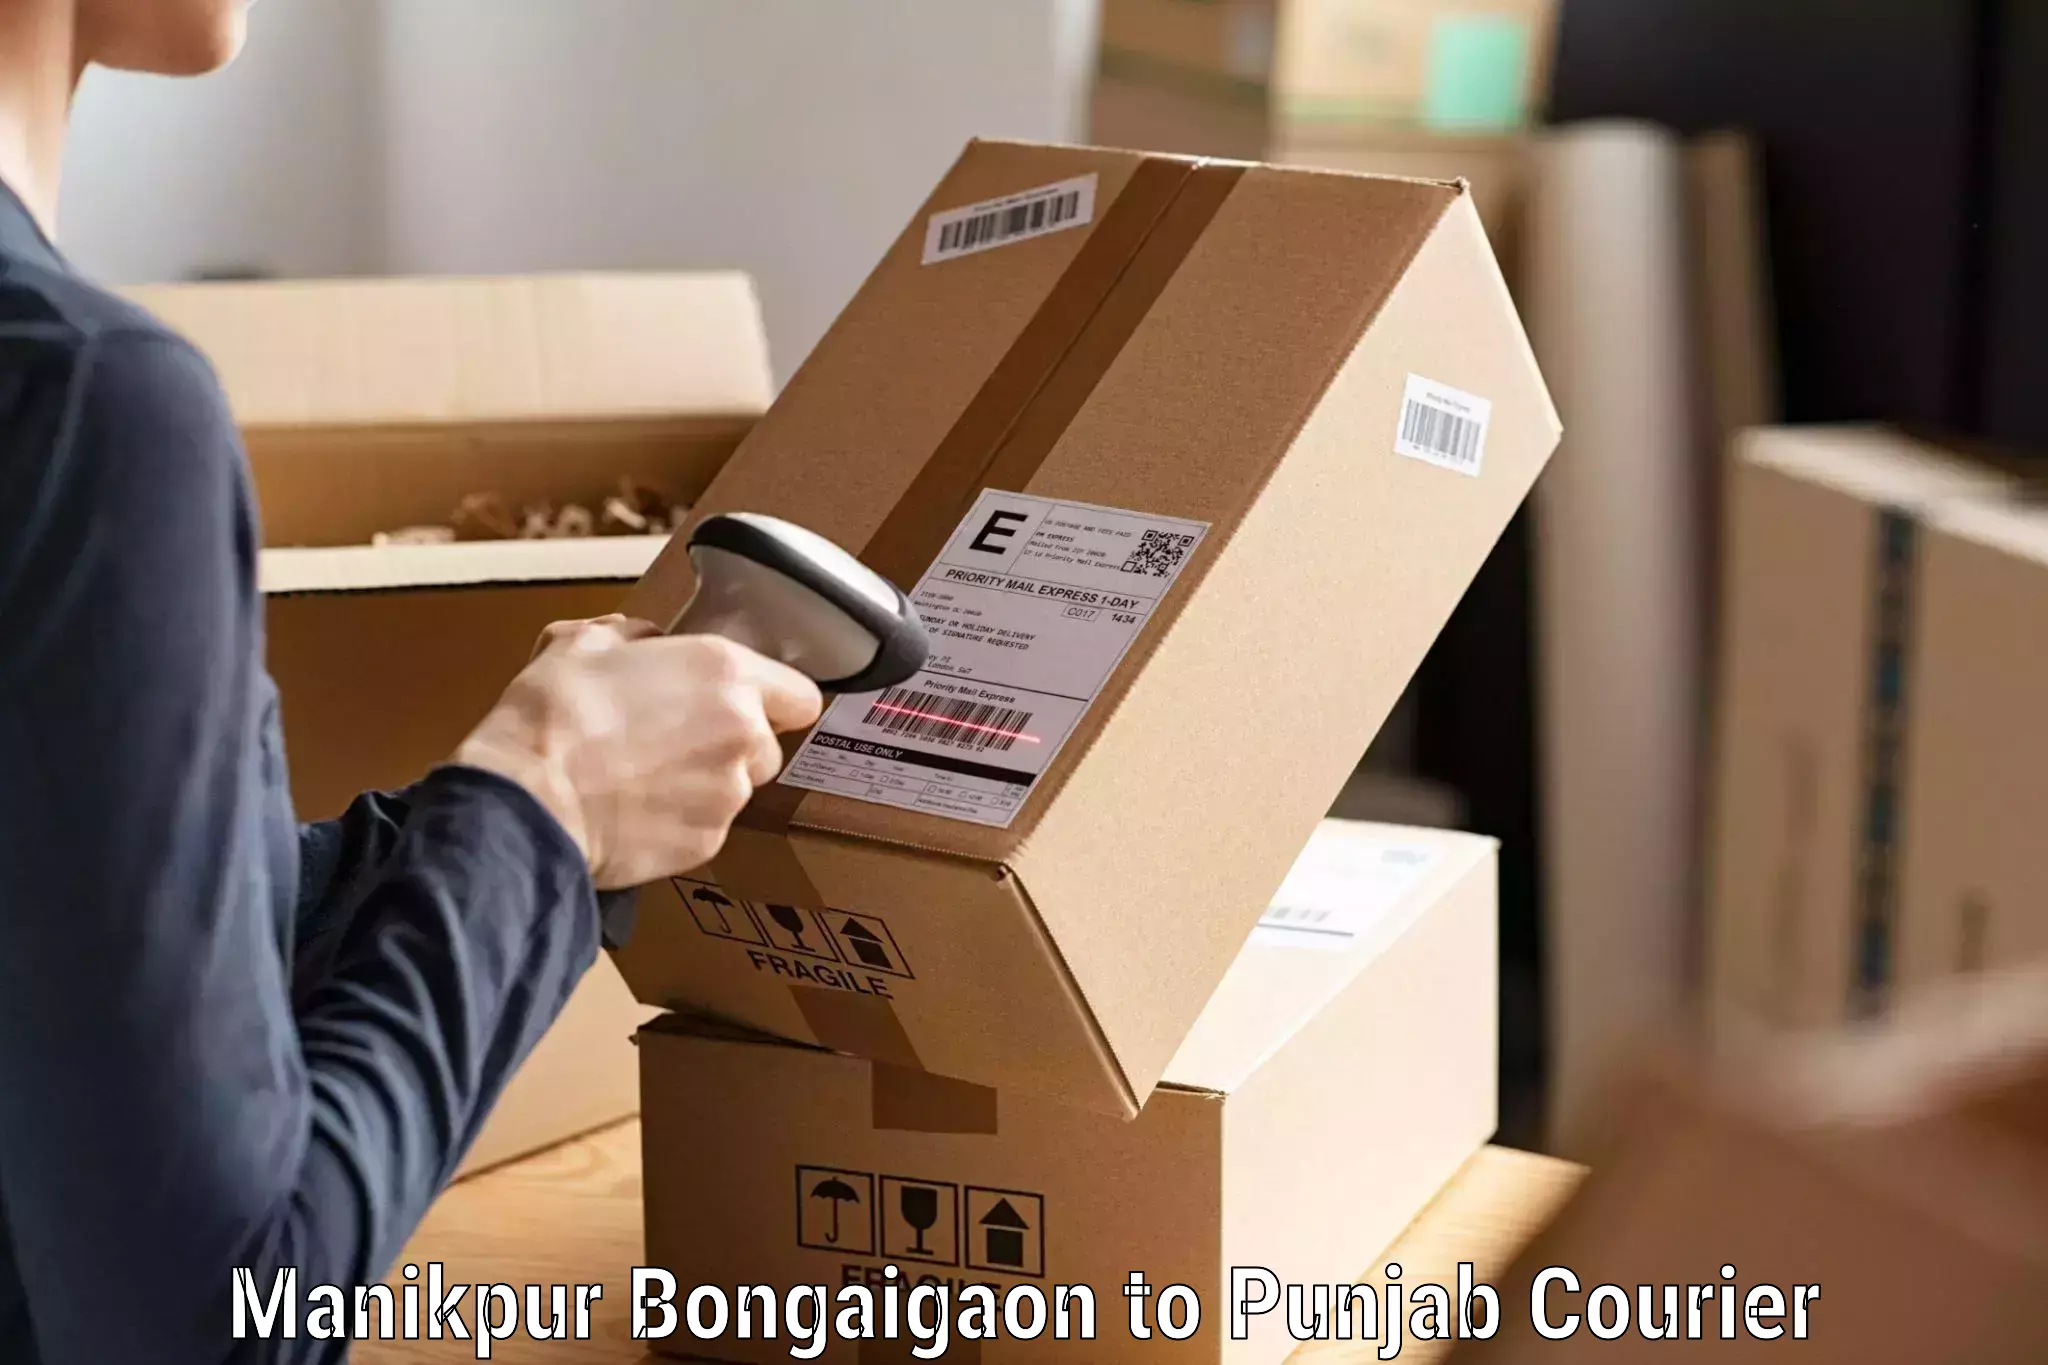 E-commerce shipping partnerships Manikpur Bongaigaon to Dera Bassi